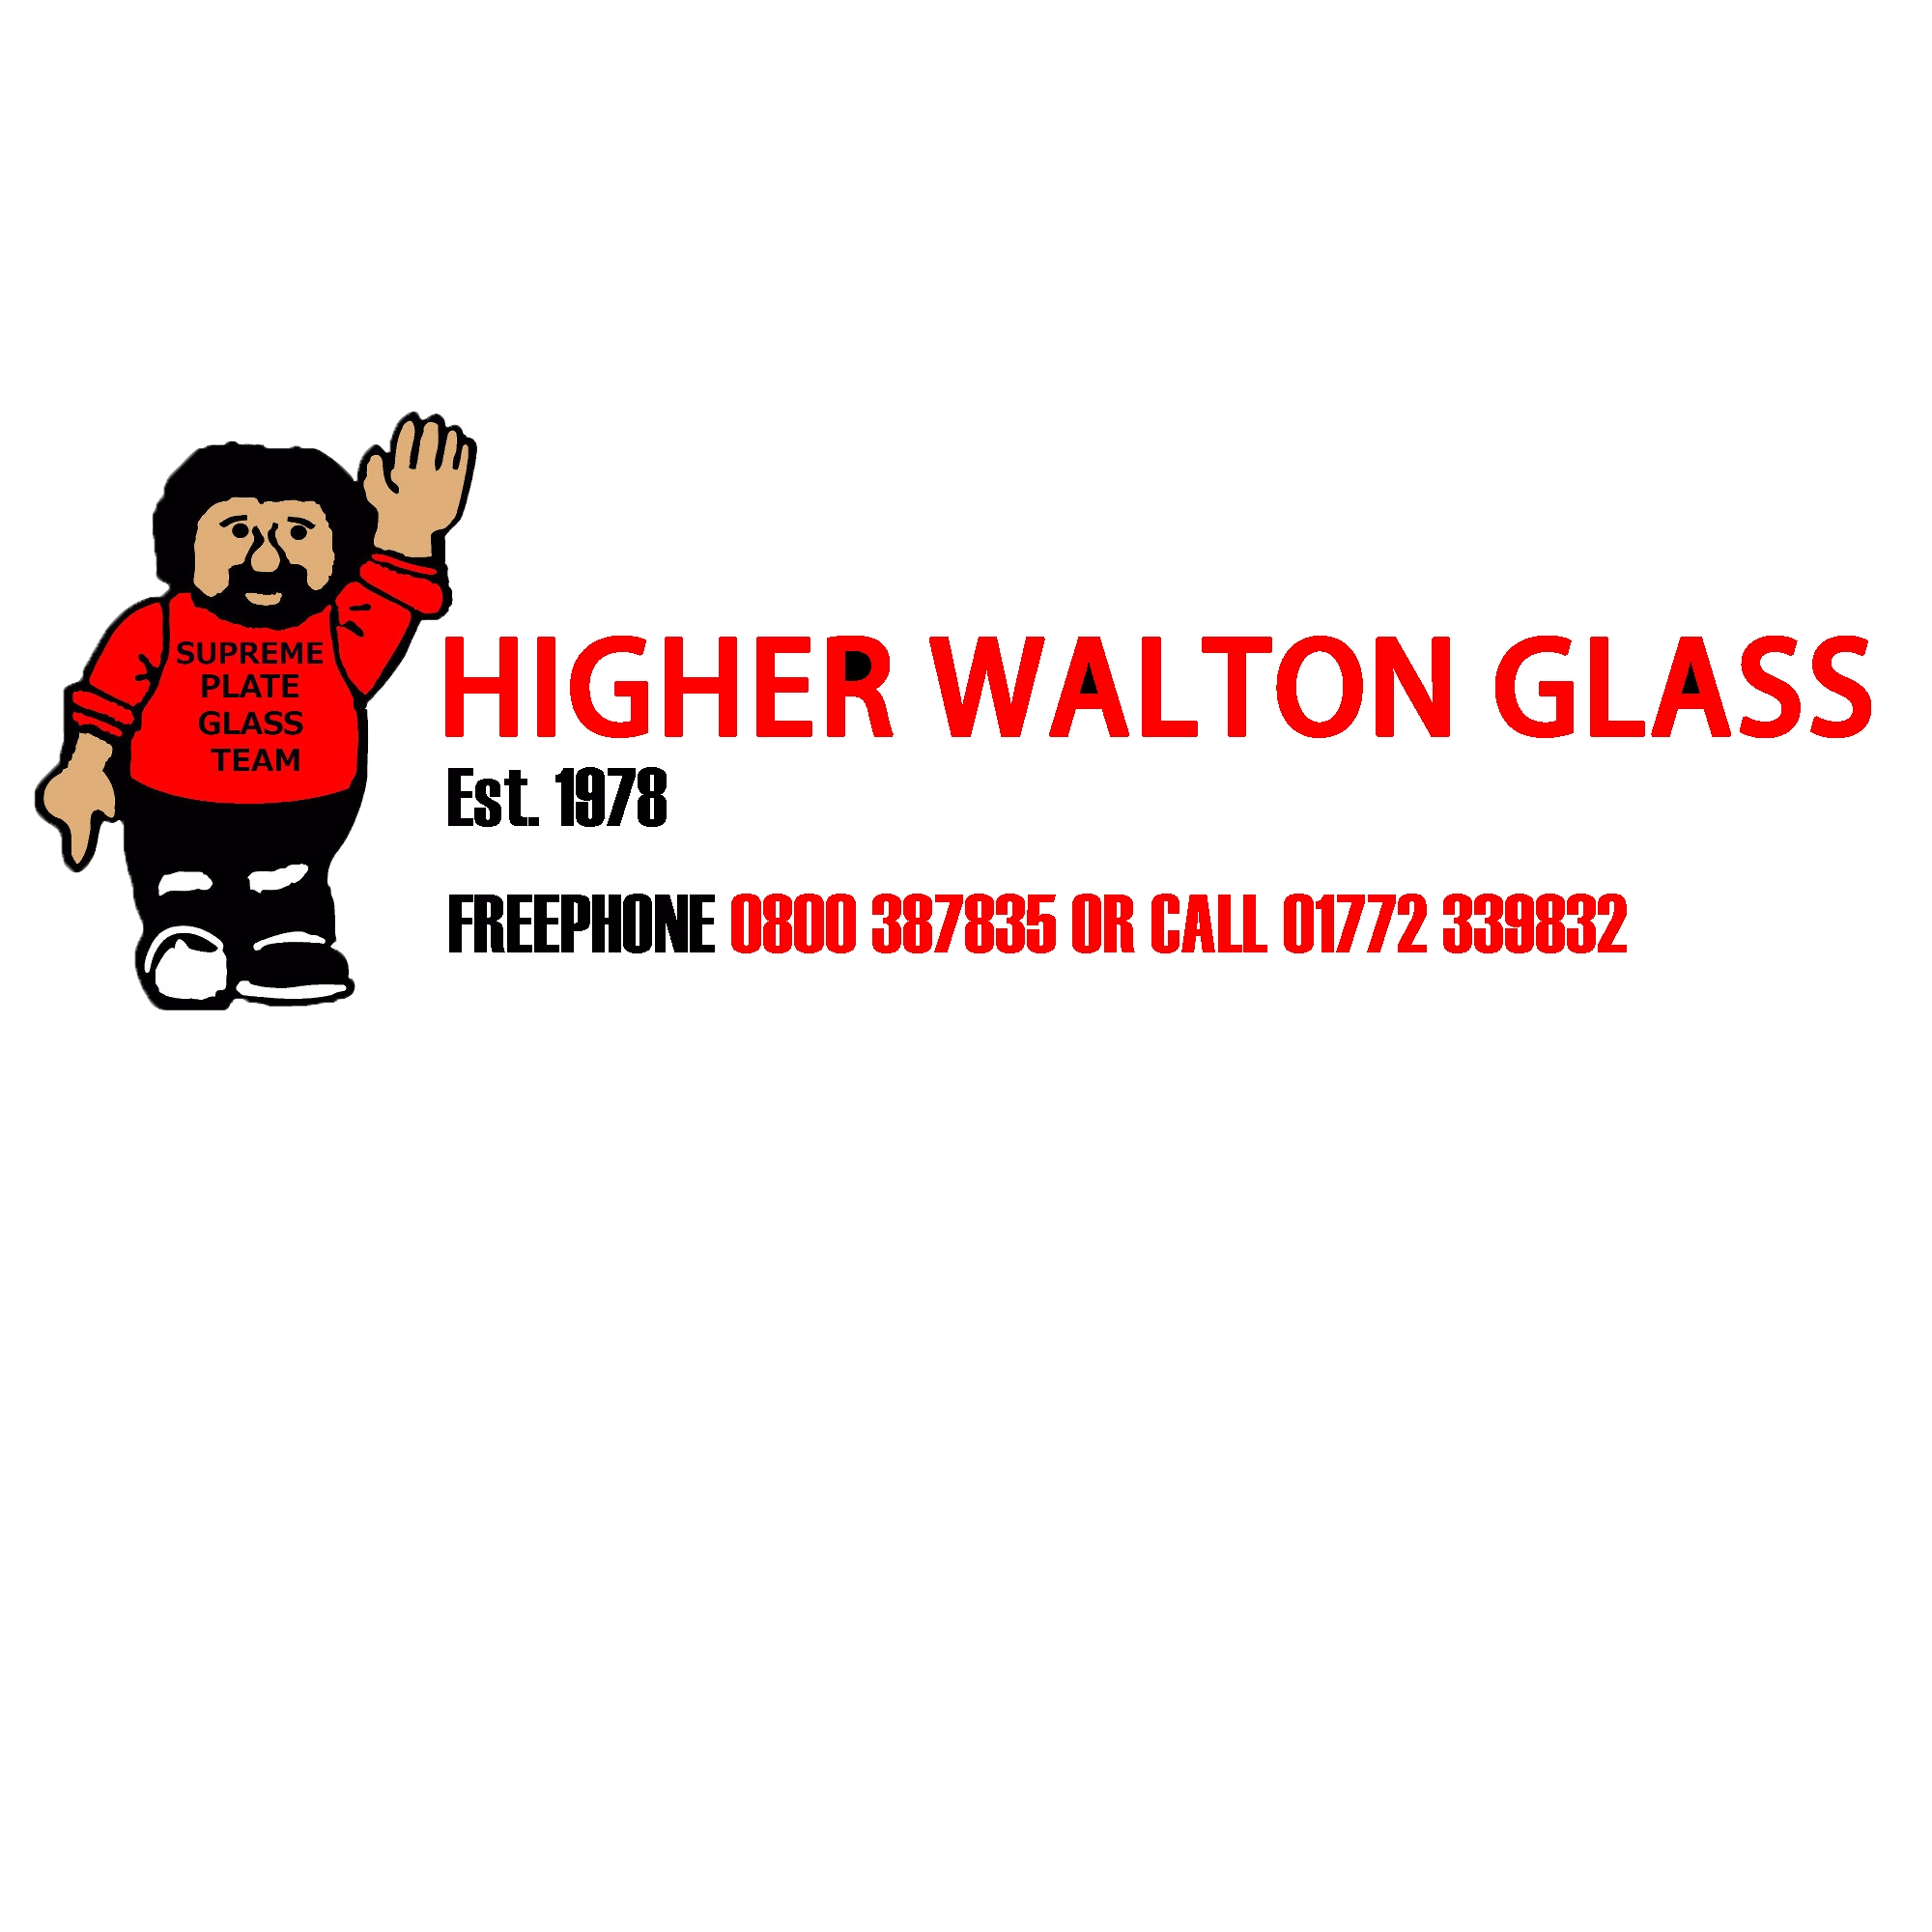 Main photo for Higher Walton Glass Ltd